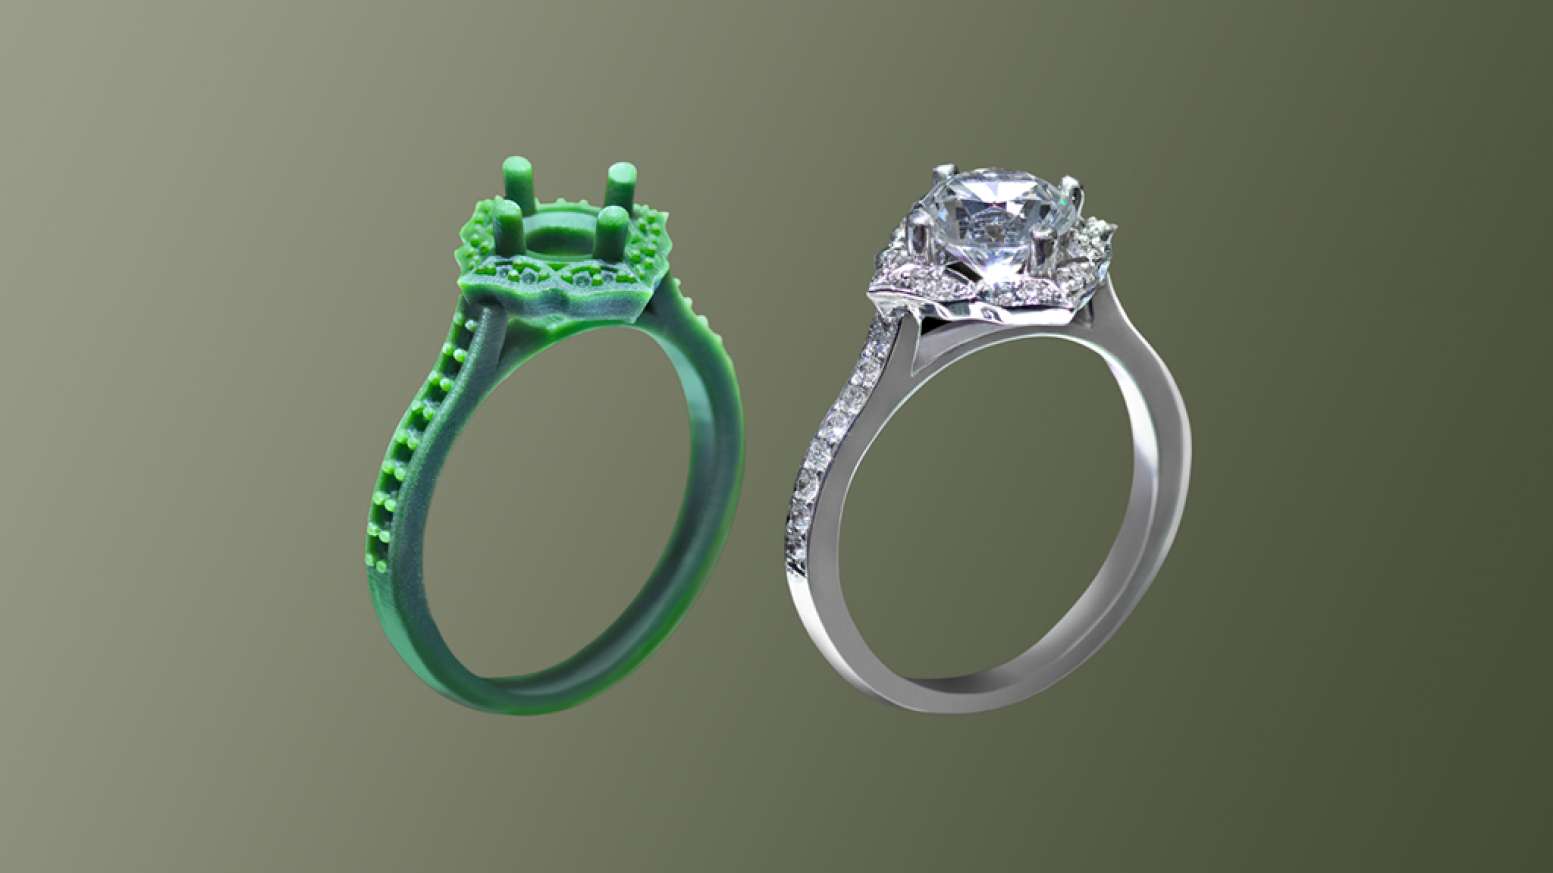 Creating Custom 3D Printed Jewellery